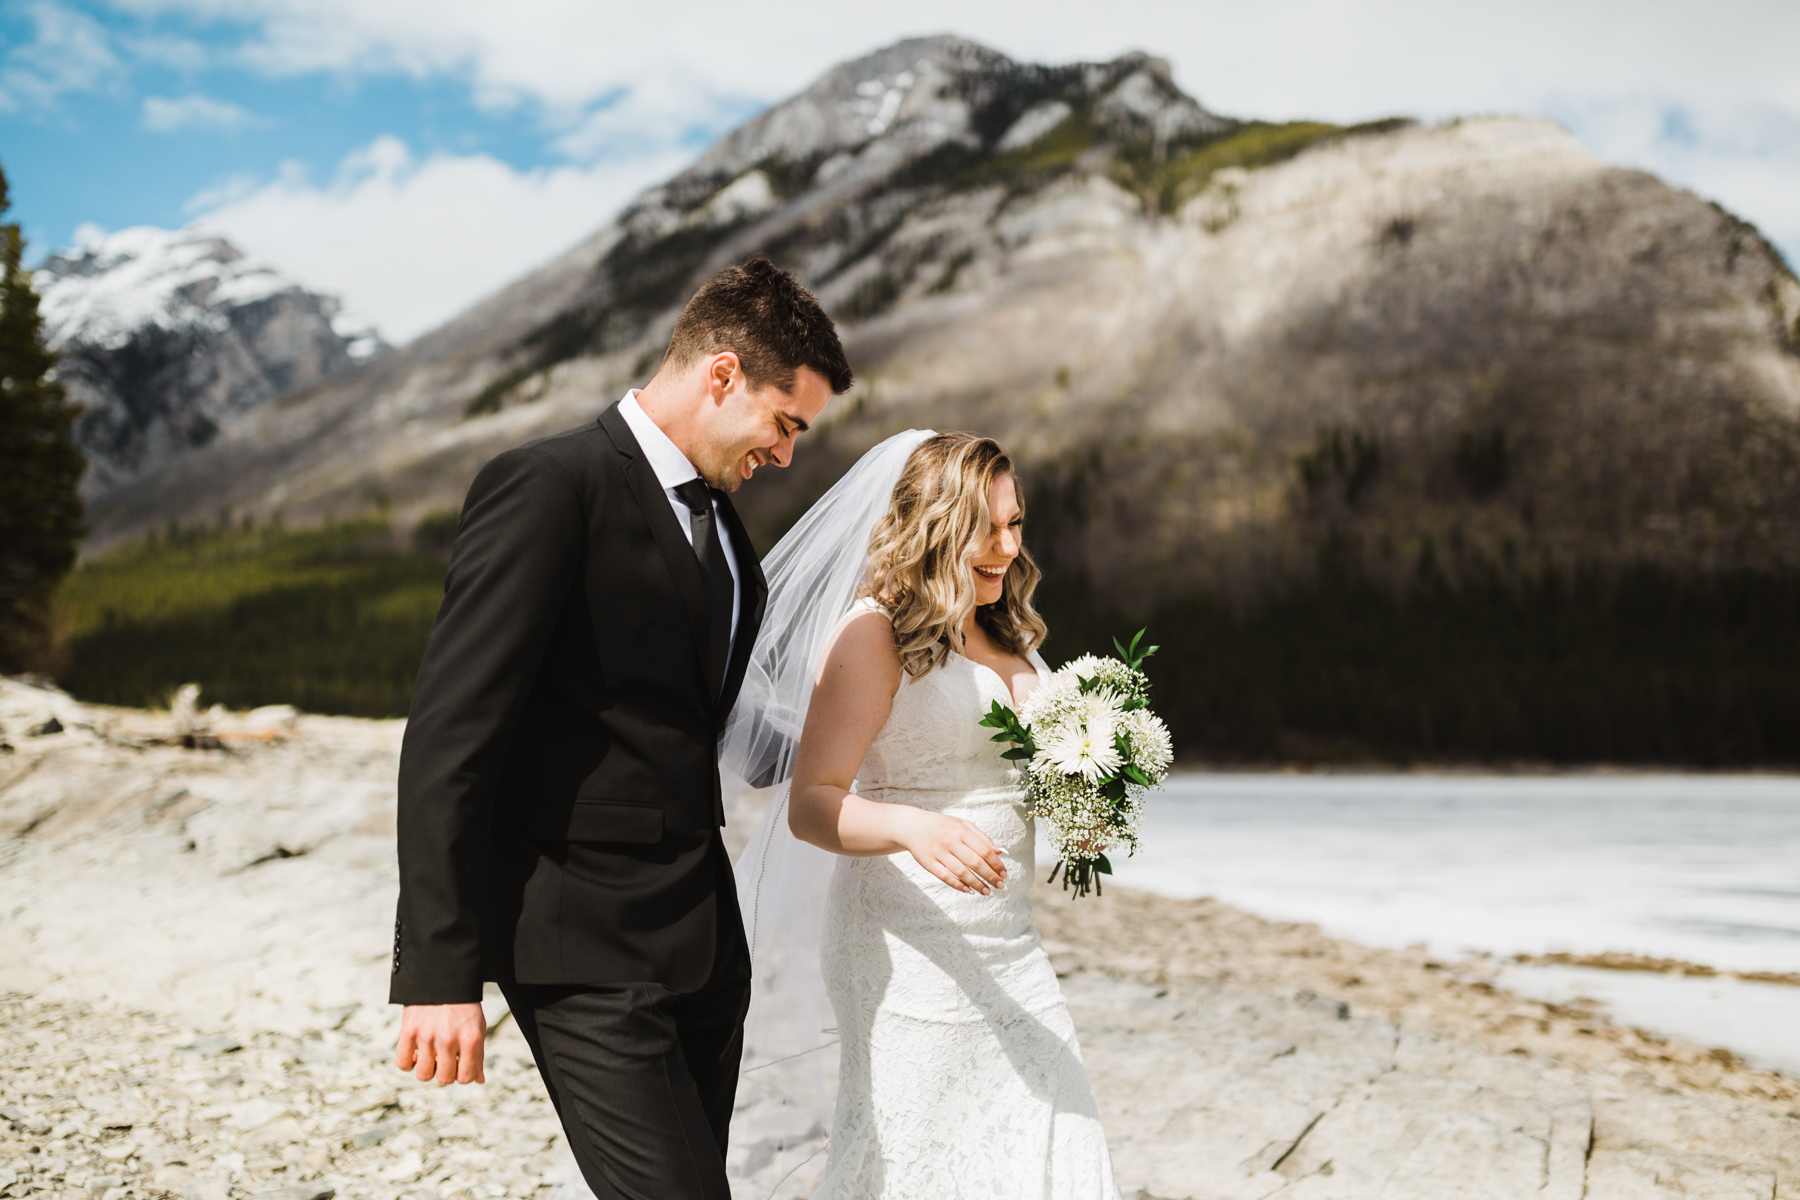 Banff Adventure Wedding Photographers for Lake Minnewanka Elopement - Image 3